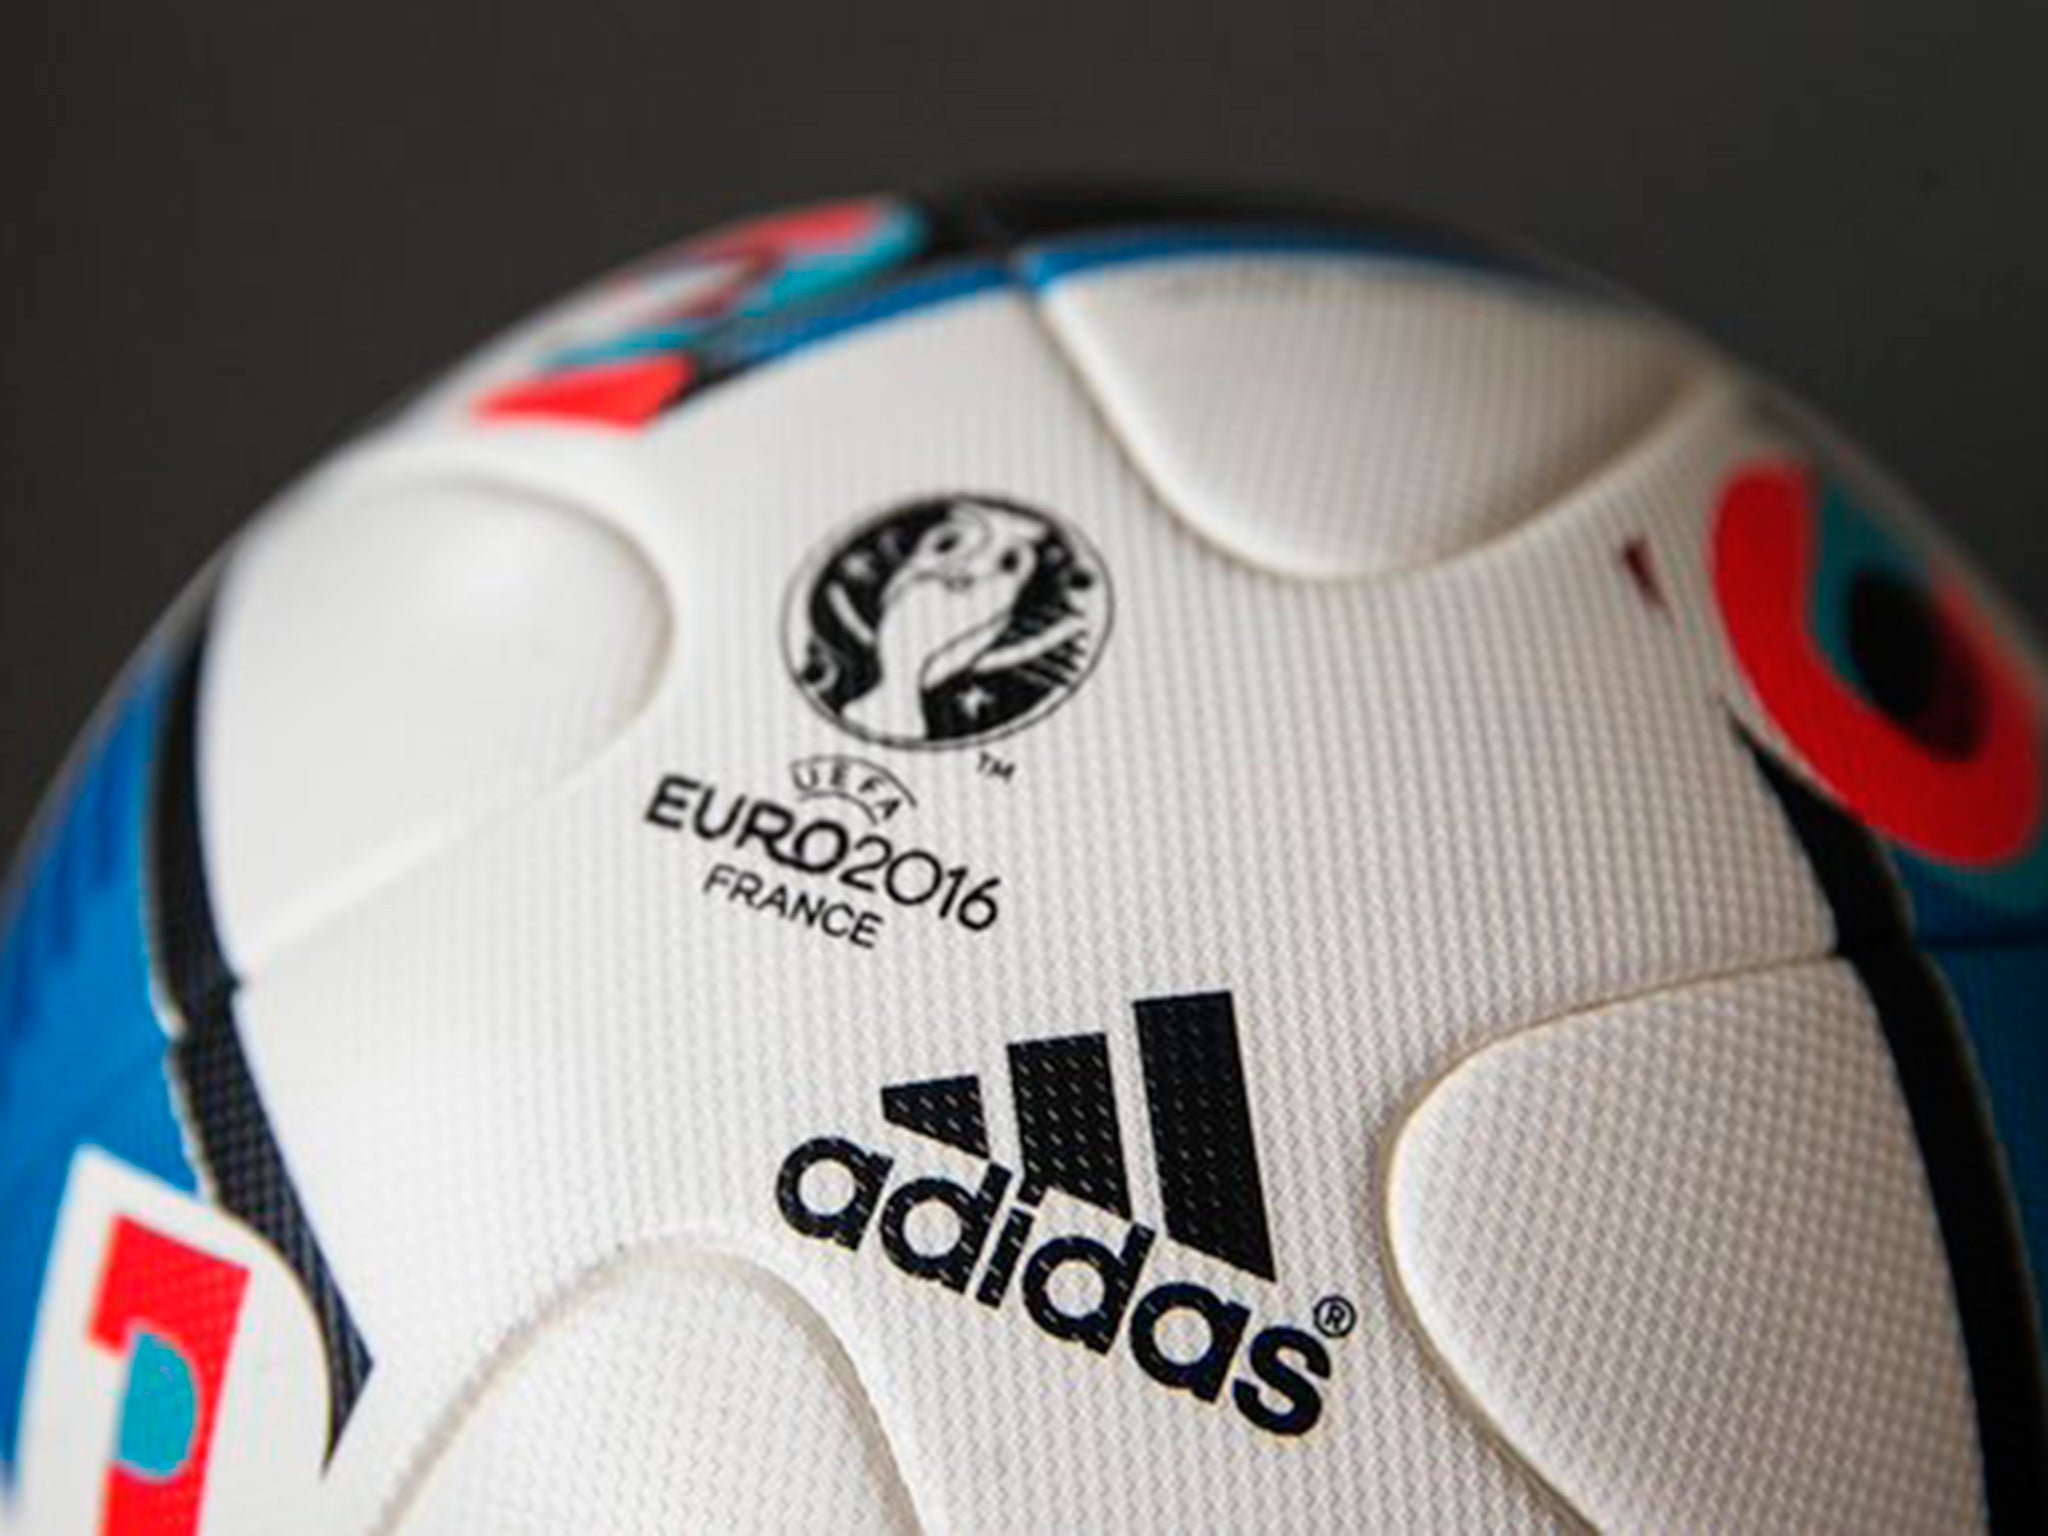 Adidas' 'Beau Jeu', the official match ball of Euro 2016